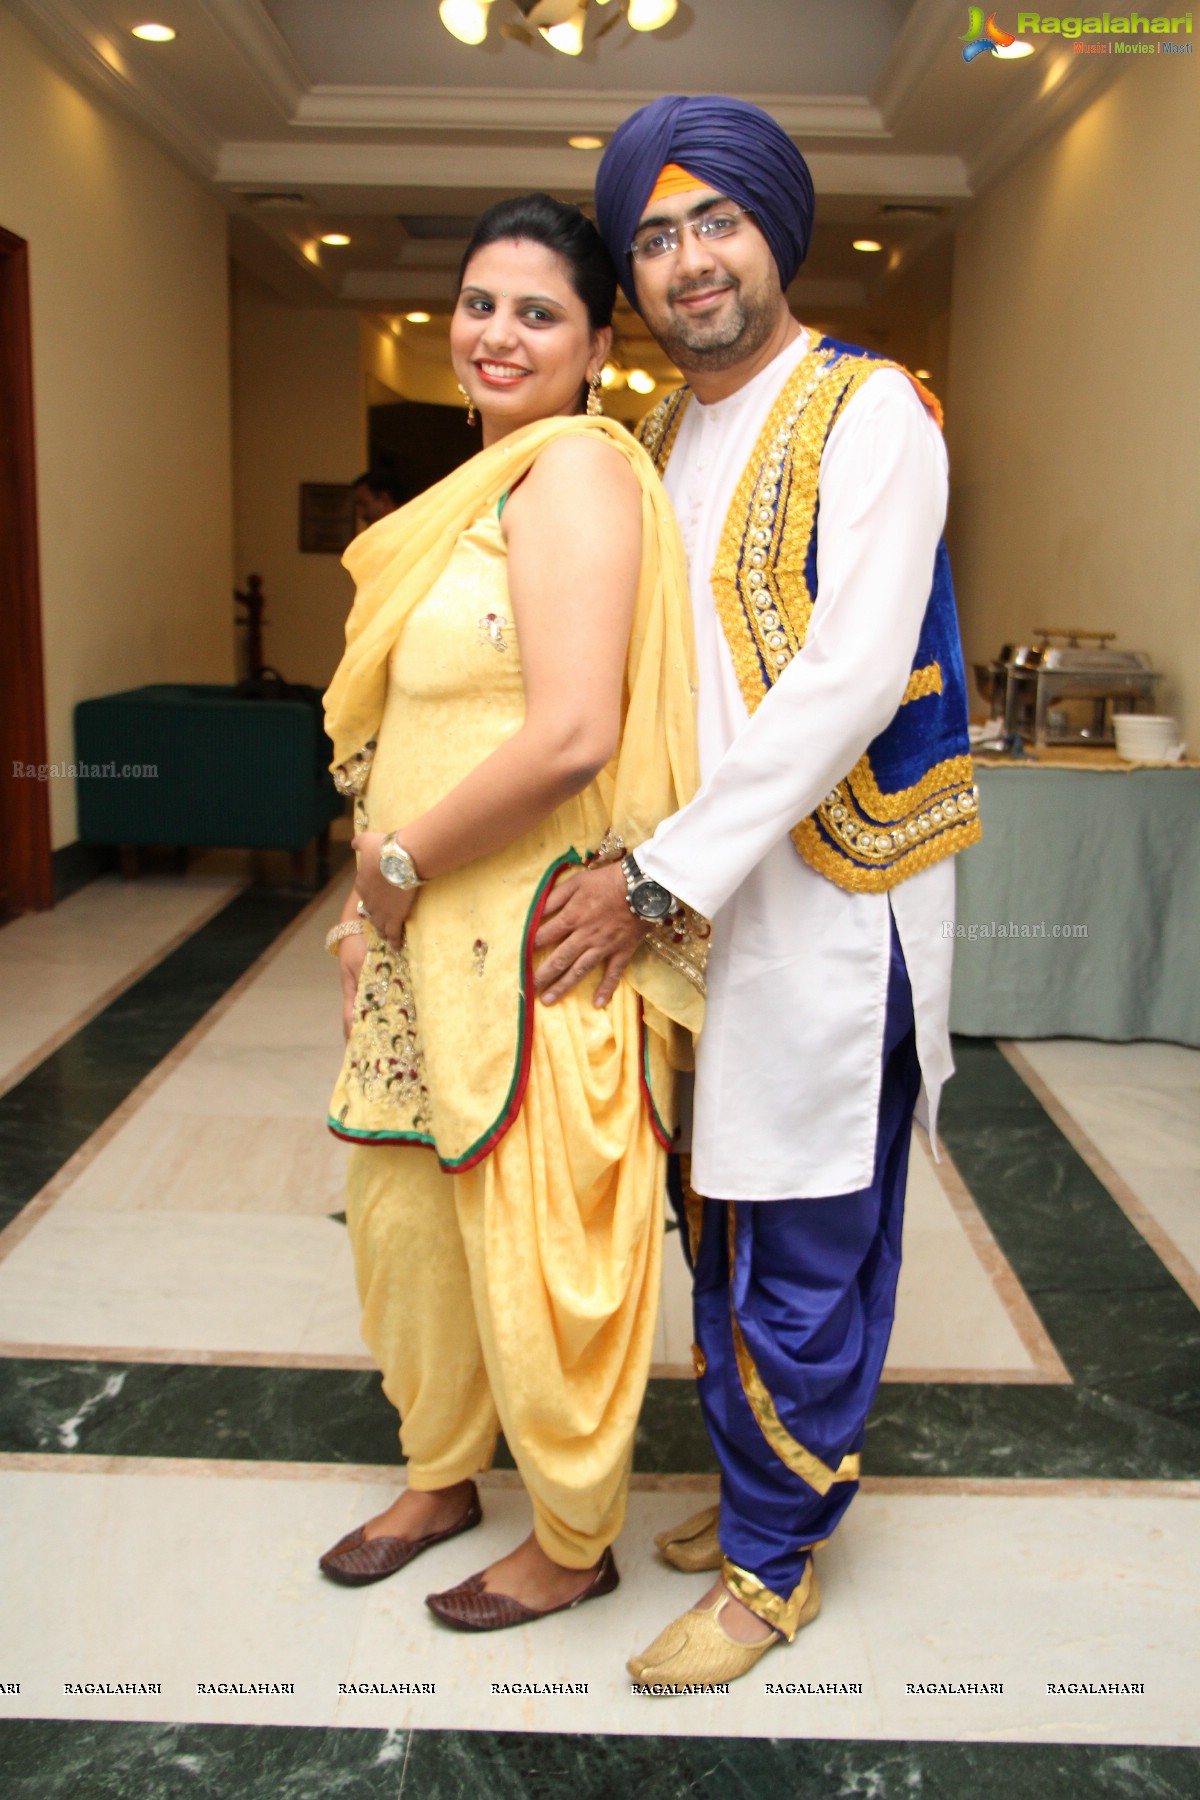 Partyholics Get-Together Party (July 2014) at Katriya Hotel, Hyderabad